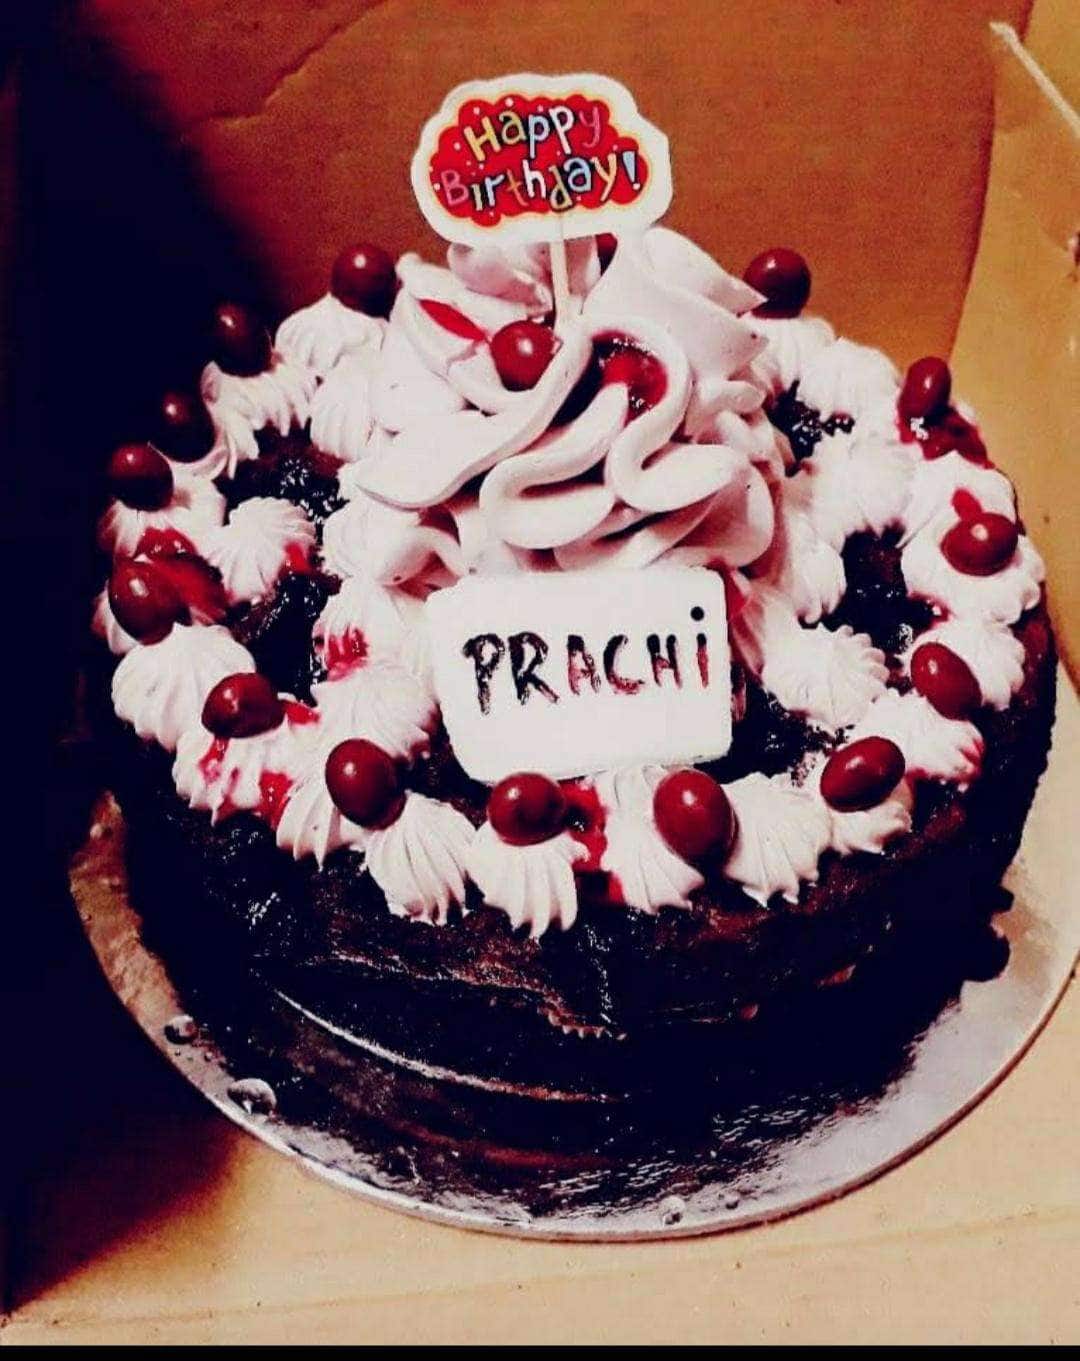 Happy Birthday Prachi - Video And Images | Birthday cake for husband, Cake  for husband, Friends birthday cake